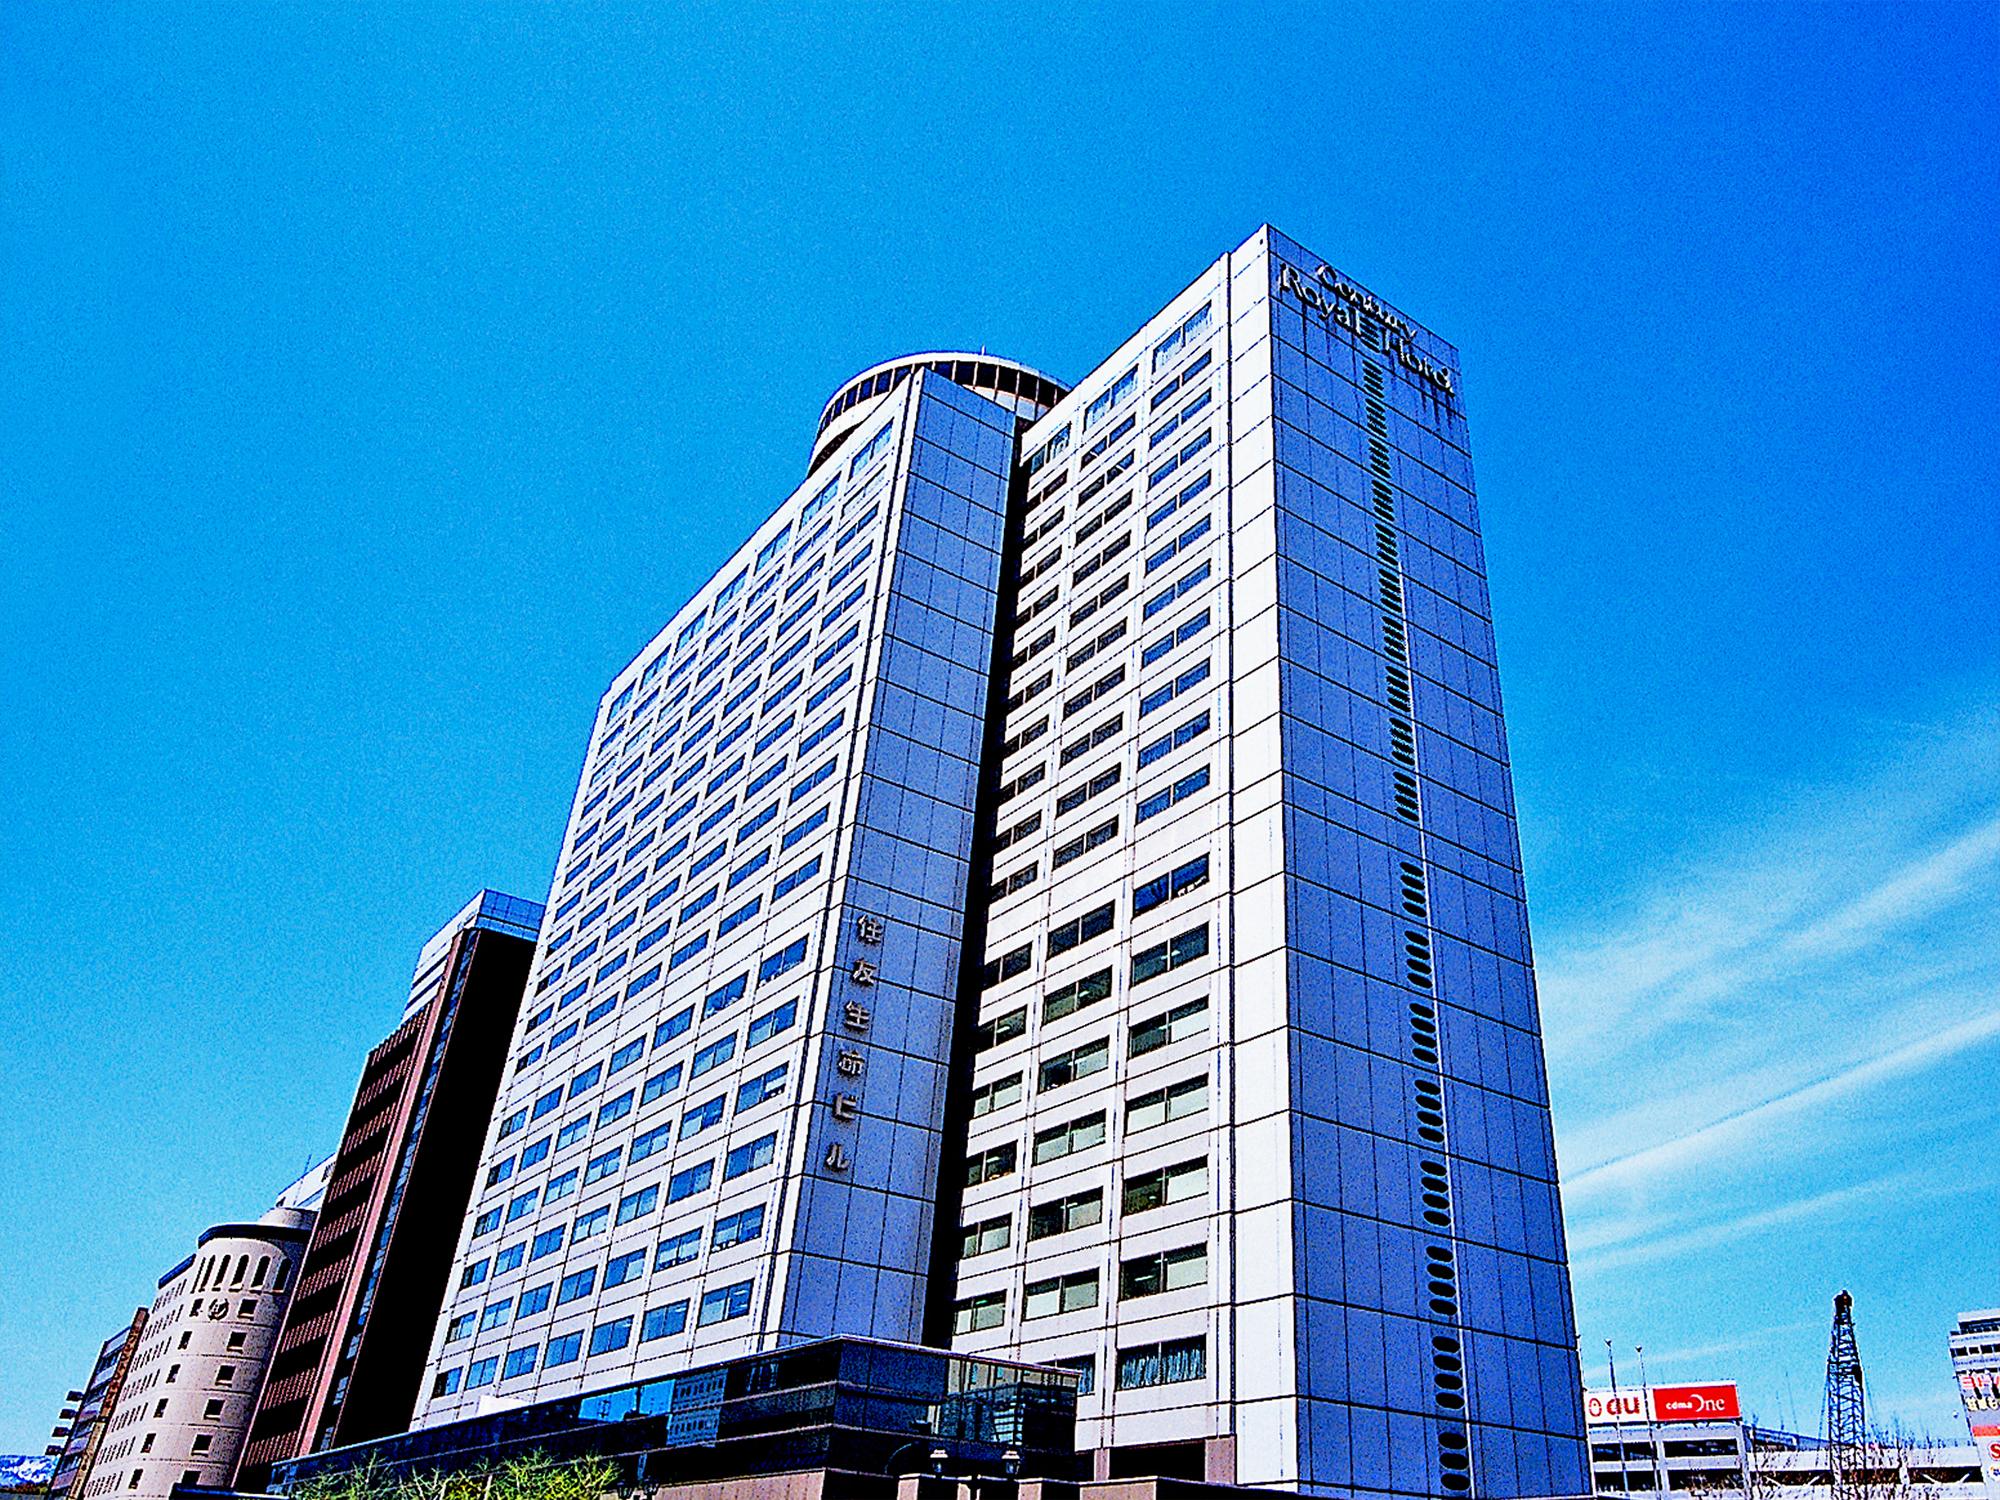 Century Royal Hotel Sapporo Esterno foto